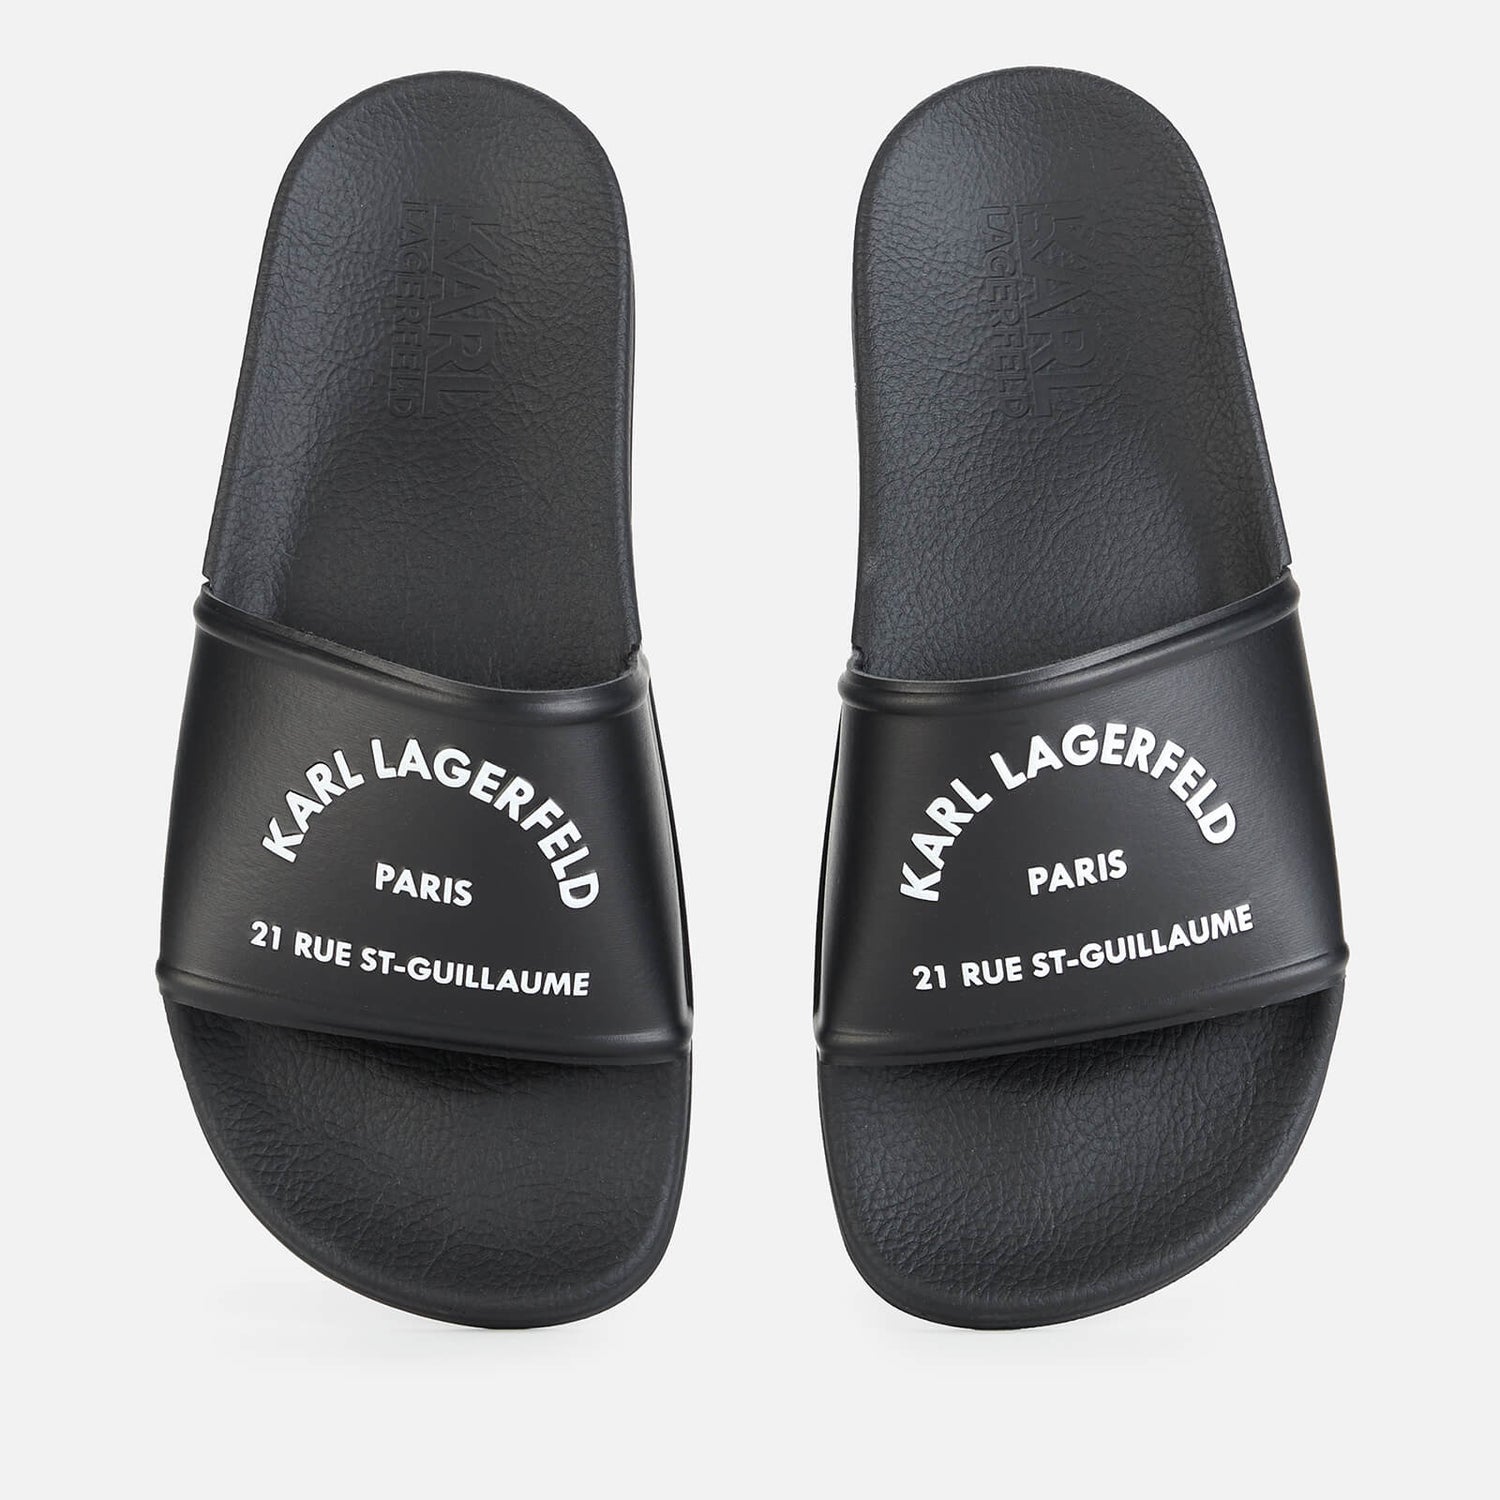 KARL LAGERFELD Women's Kondo Ii Maison Slide Sandals - Black